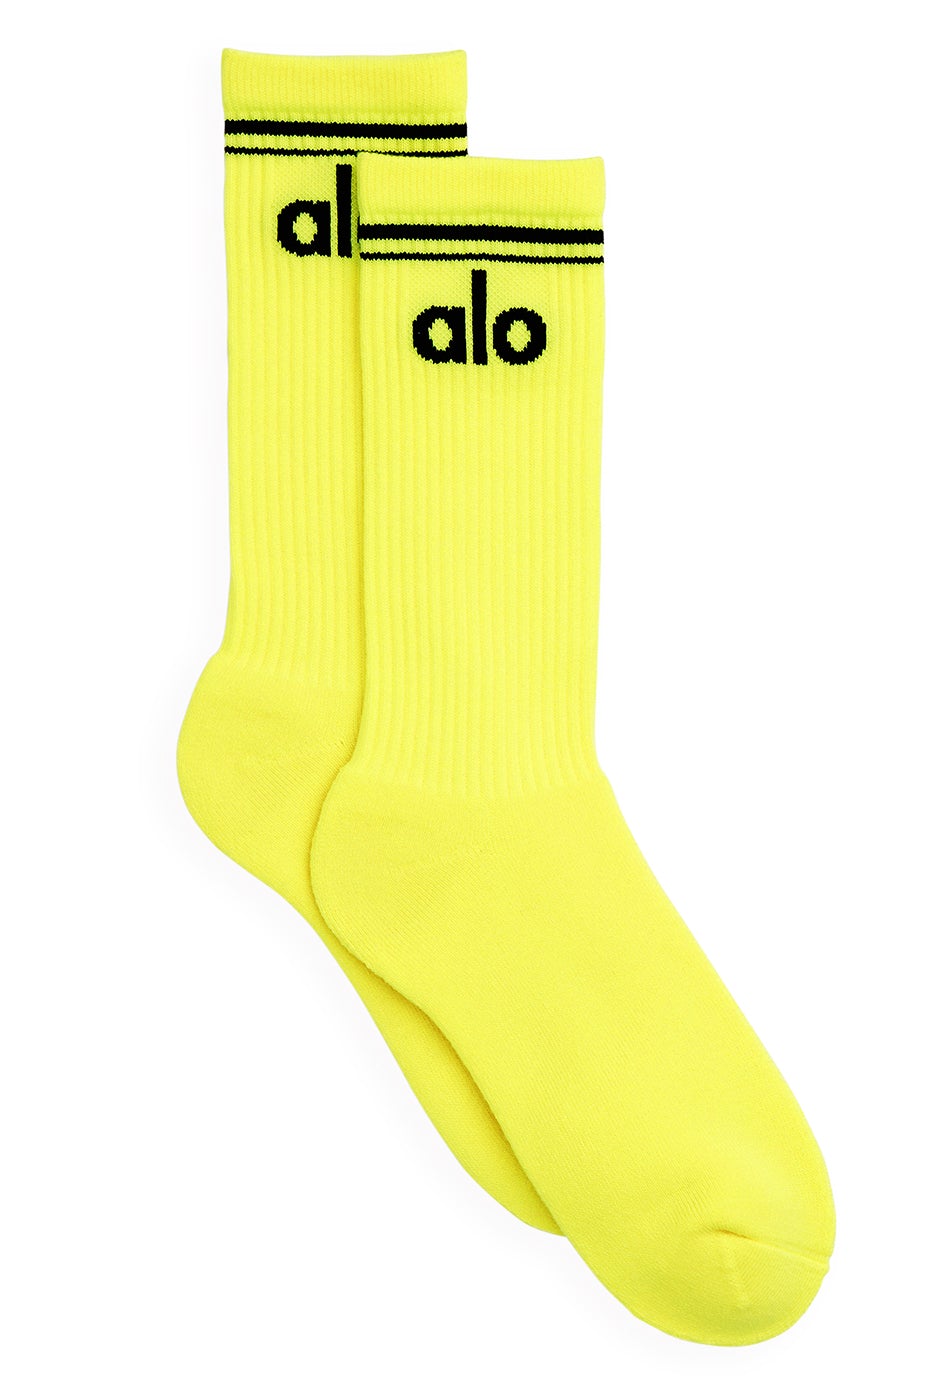 Socks Alo, Socks Alo Yoga-free shipping all over the world on Aliexpress